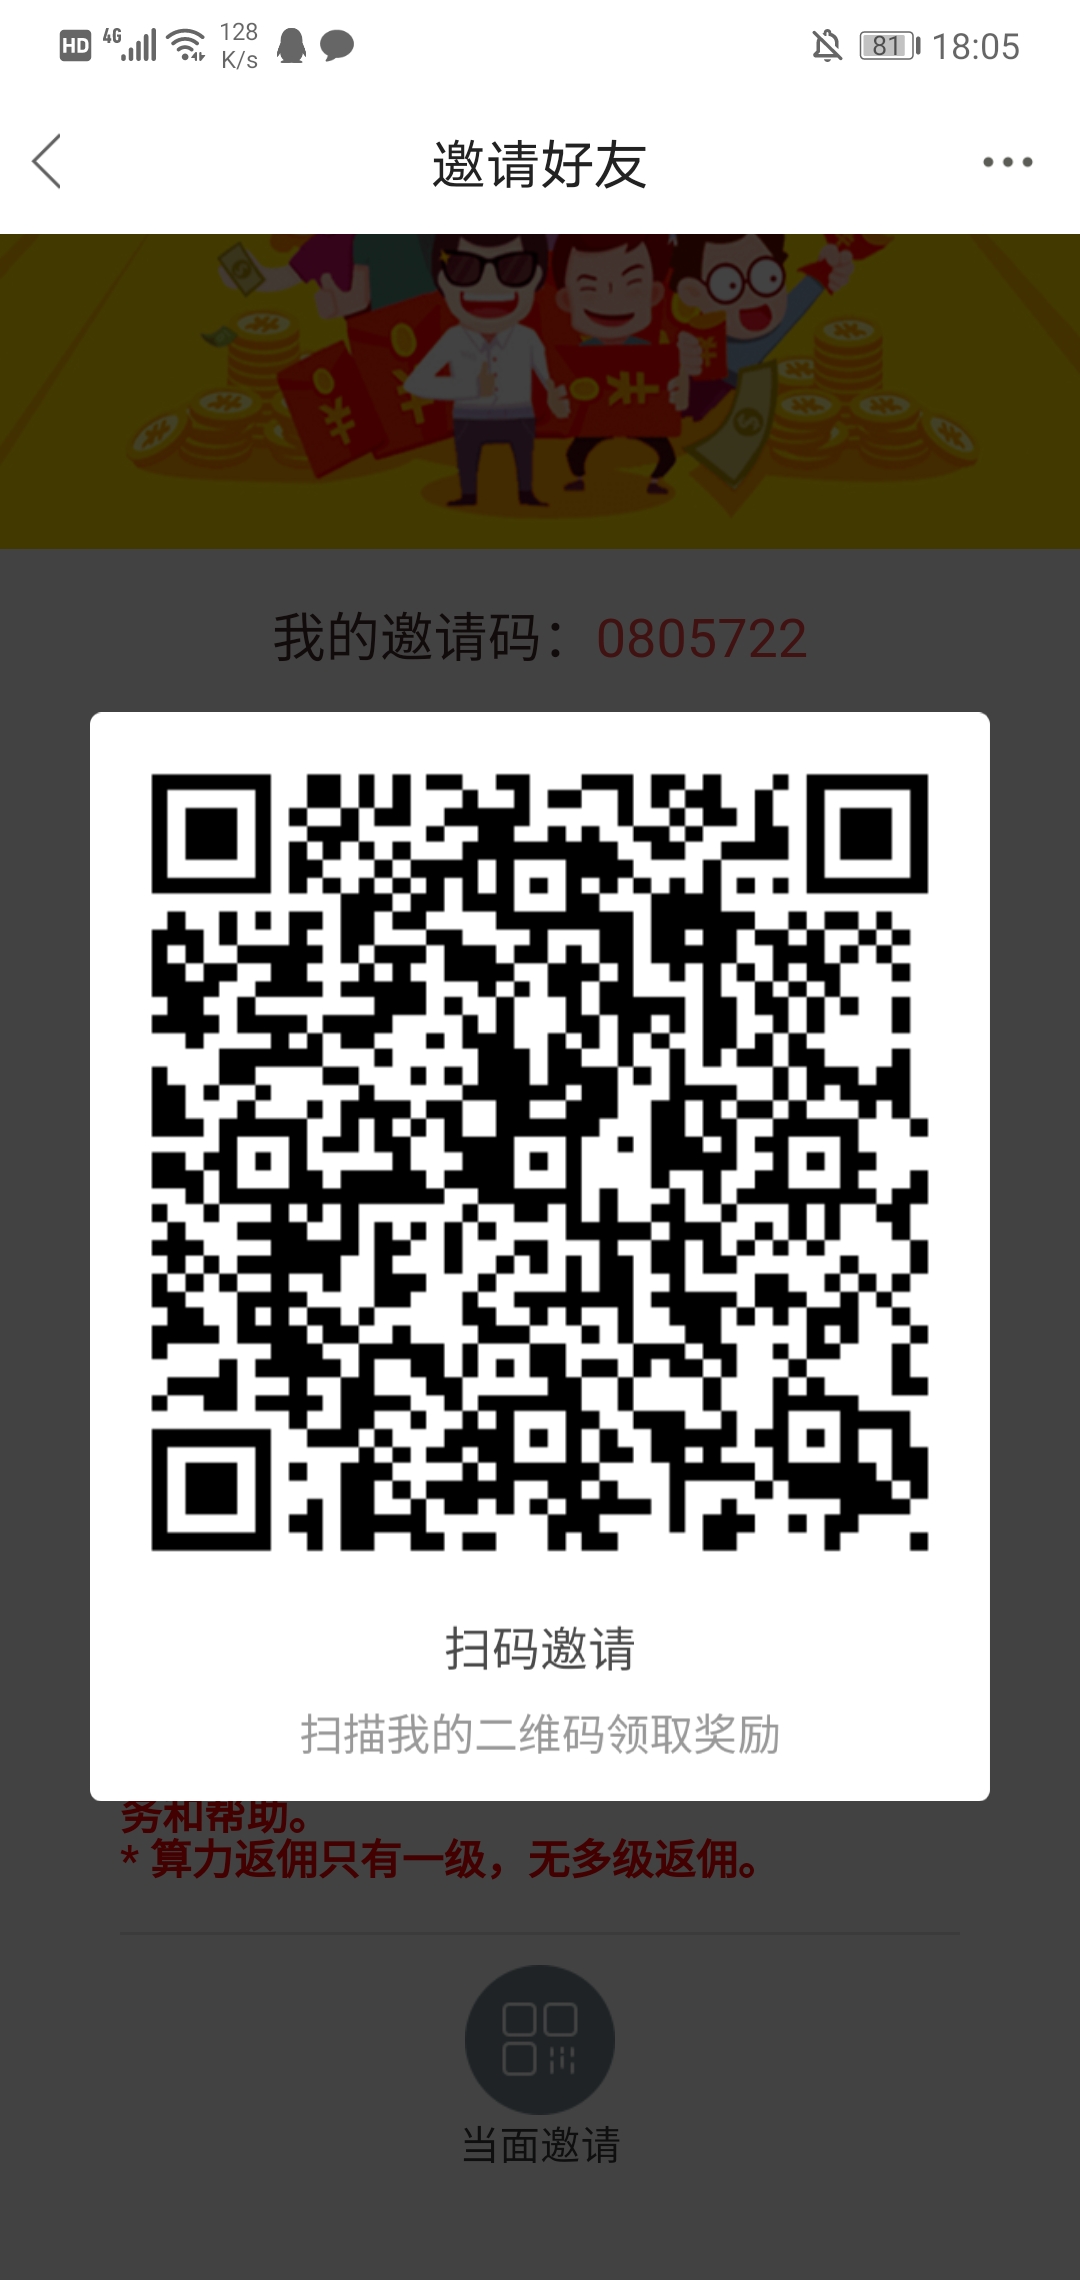 Screenshot_20210605_180553_io.blockshell.app.jpg